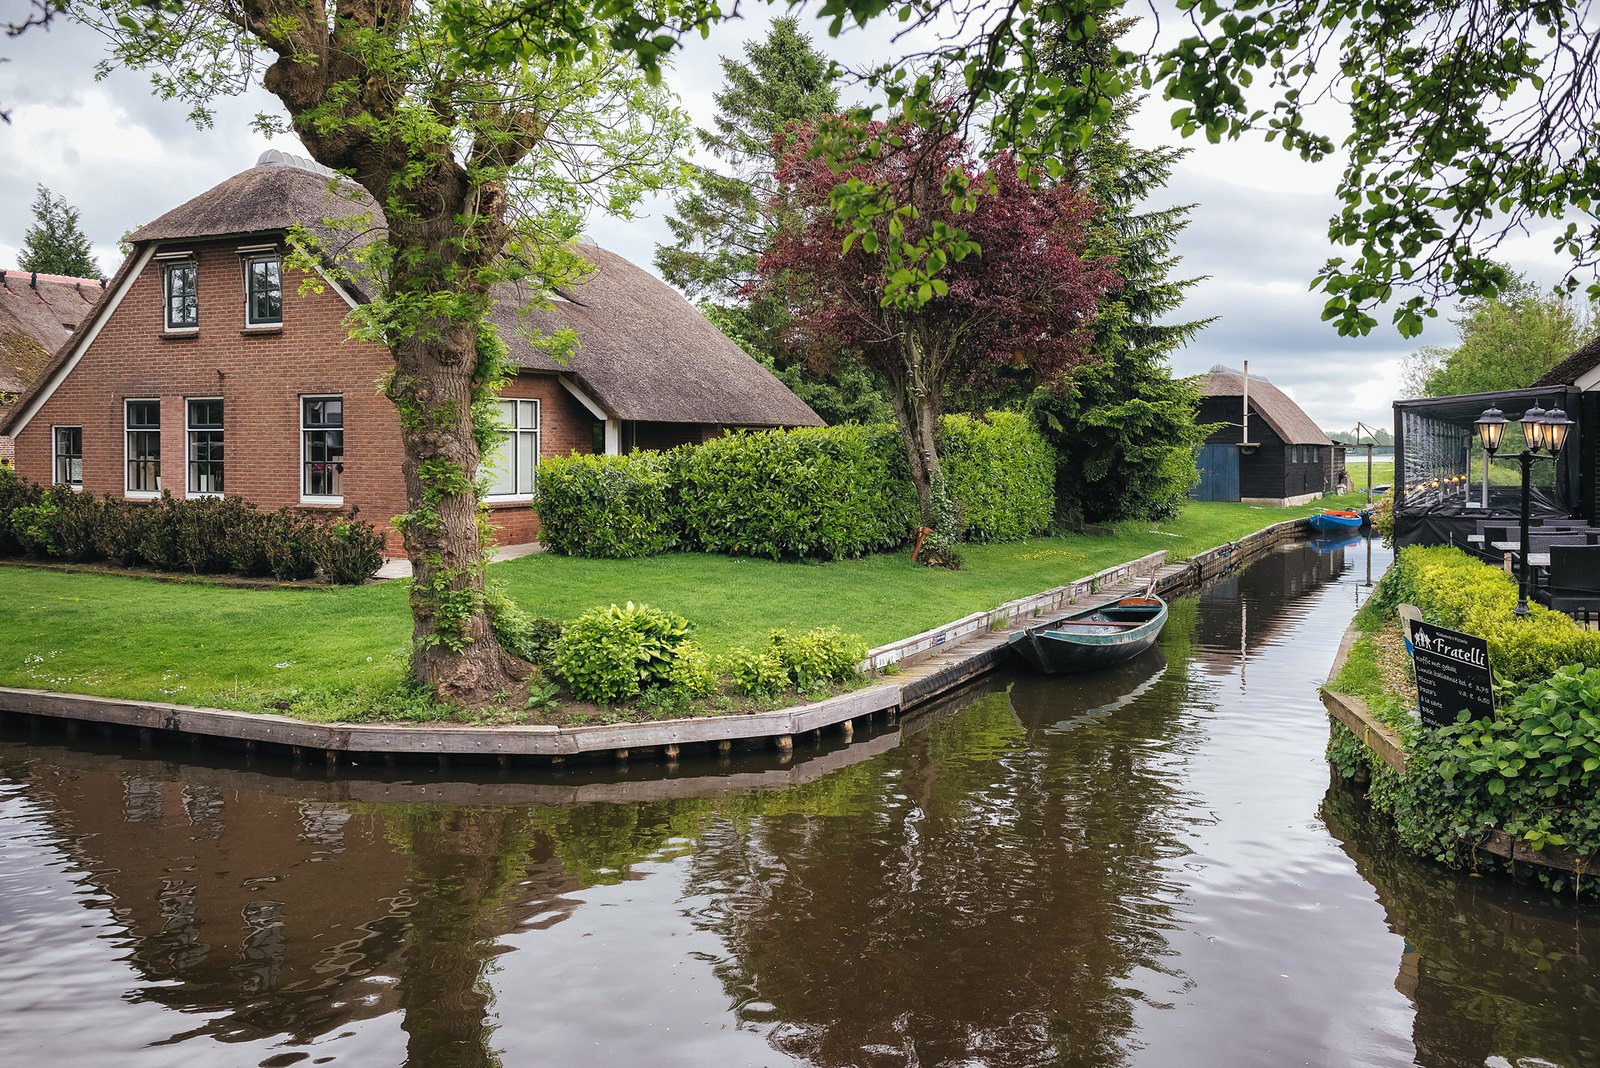 【影像札記】荷蘭 羊角村 / Netherlands(Holland) Giethoorn